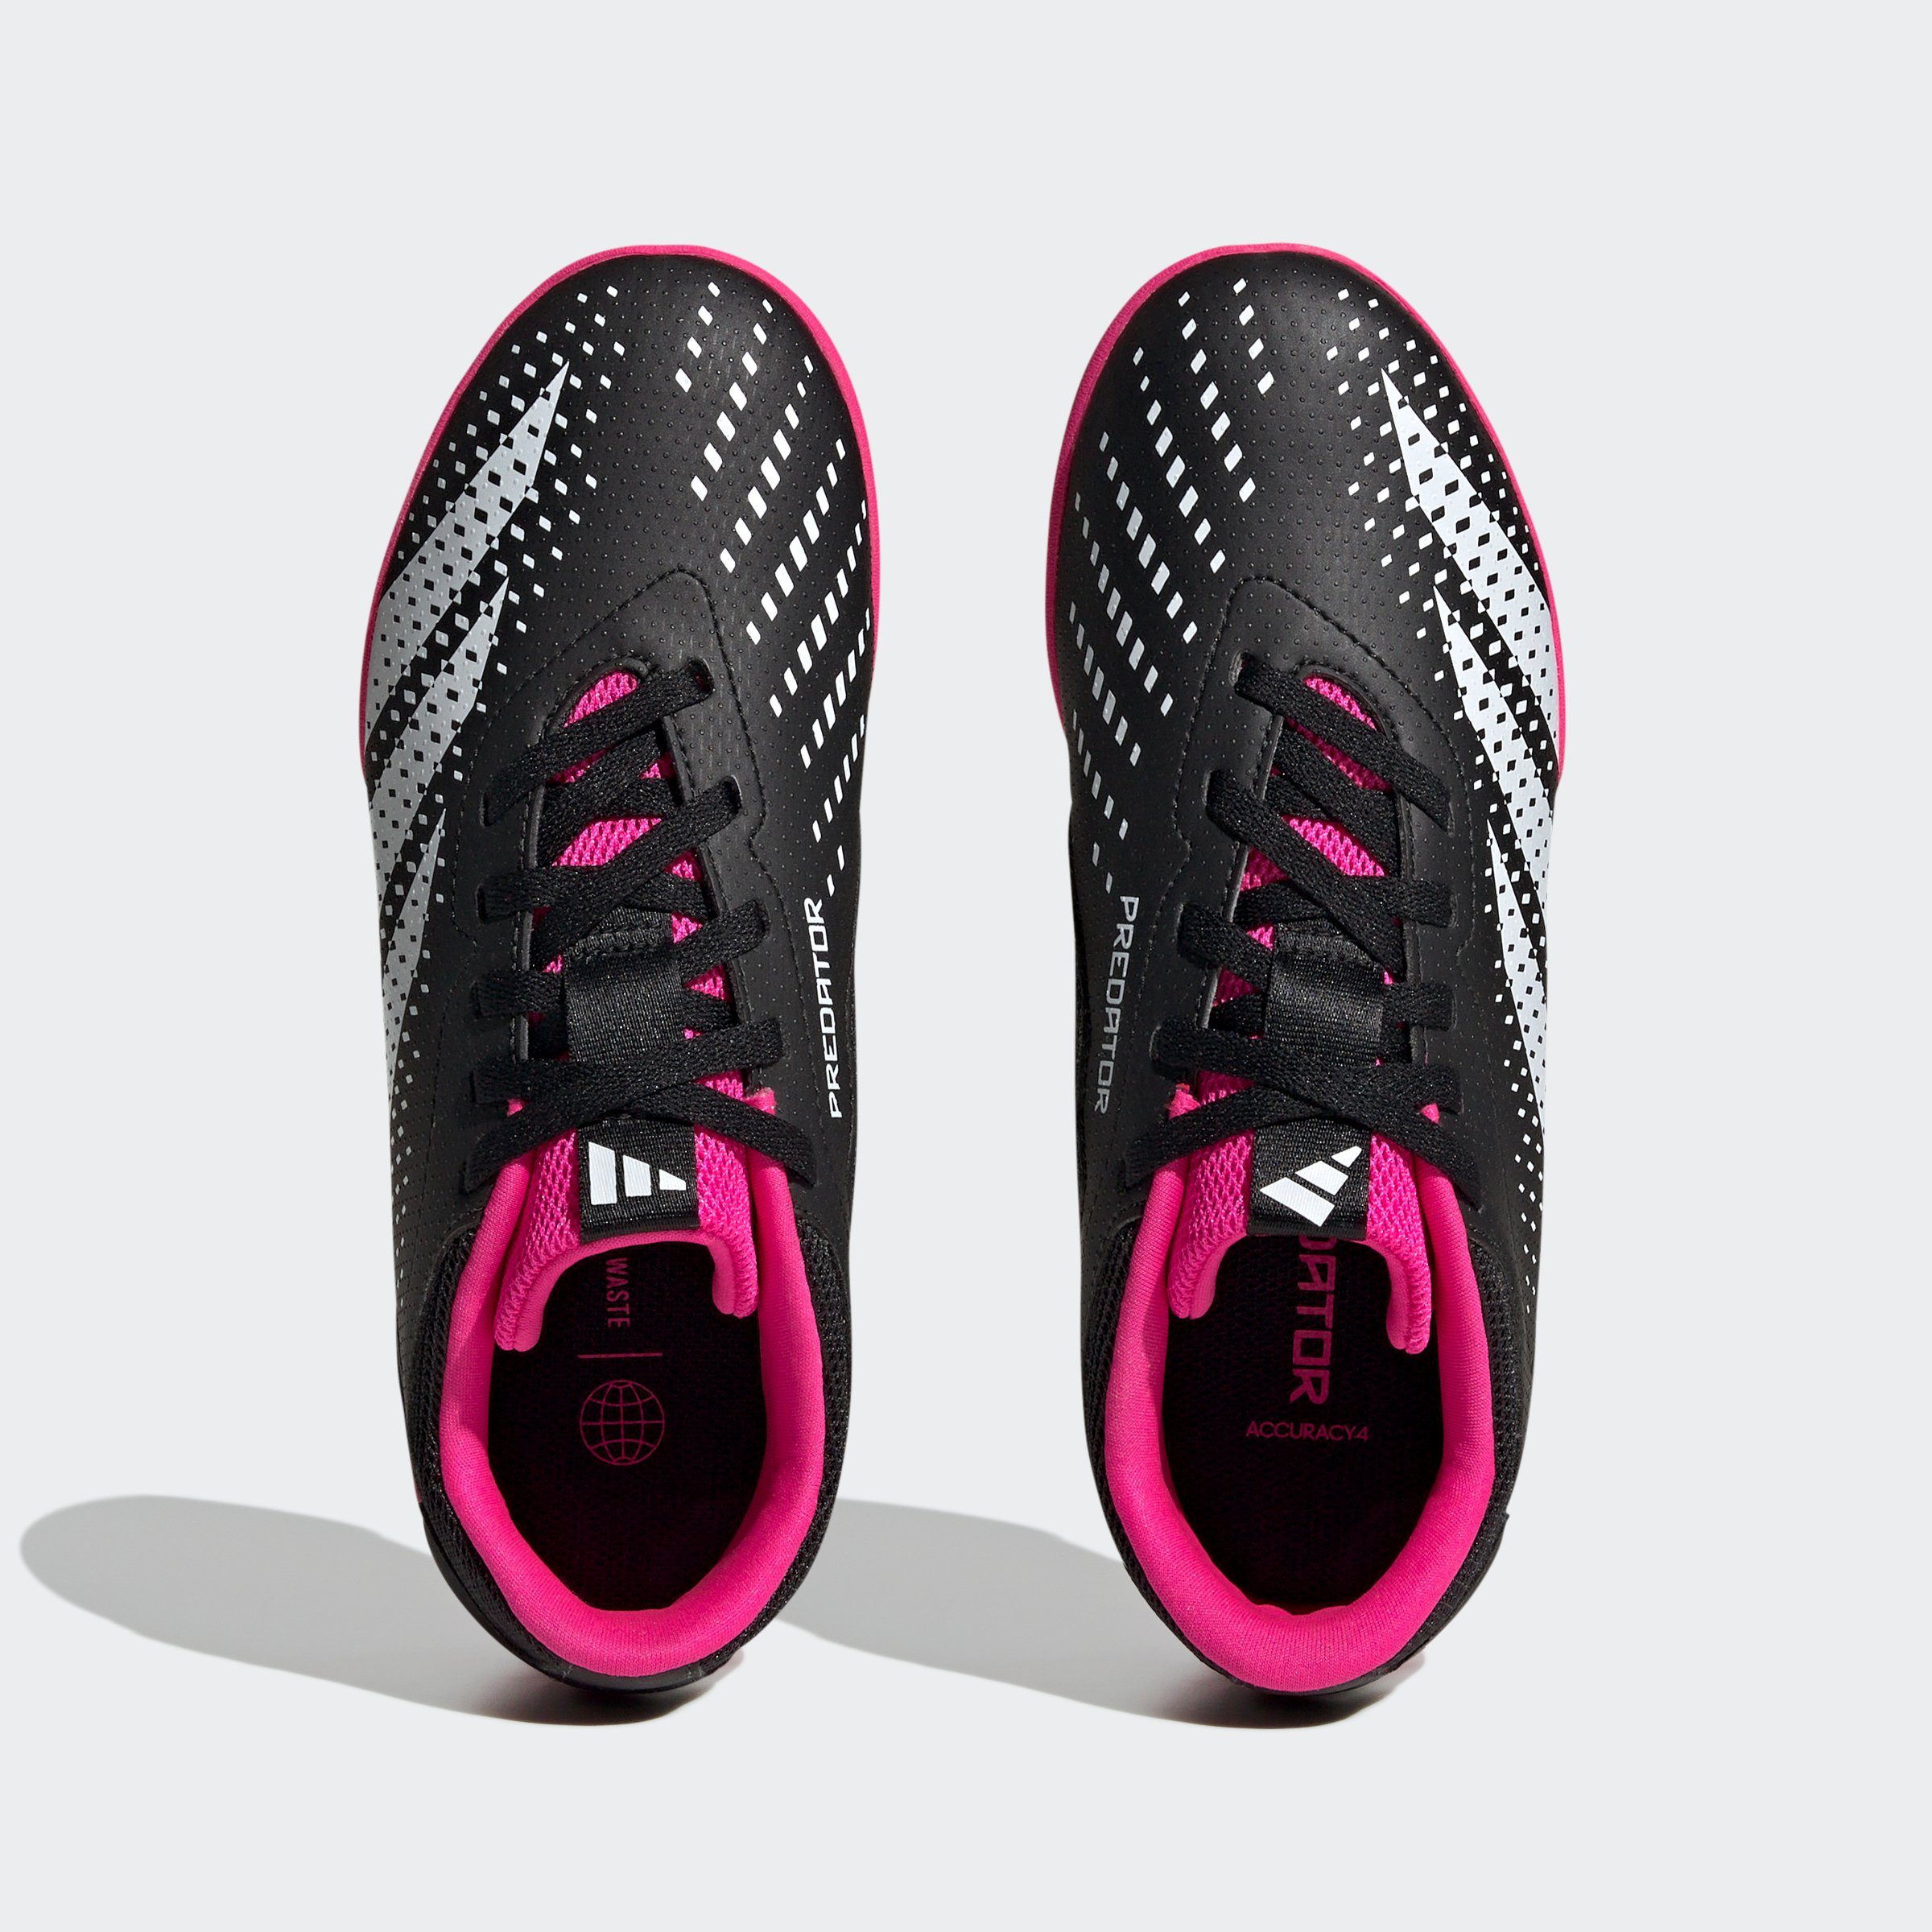 / Team PREDATOR 2 Cloud Shock adidas ACCURACY.4 / Fußballschuh Pink Performance Black White SALA Core IN